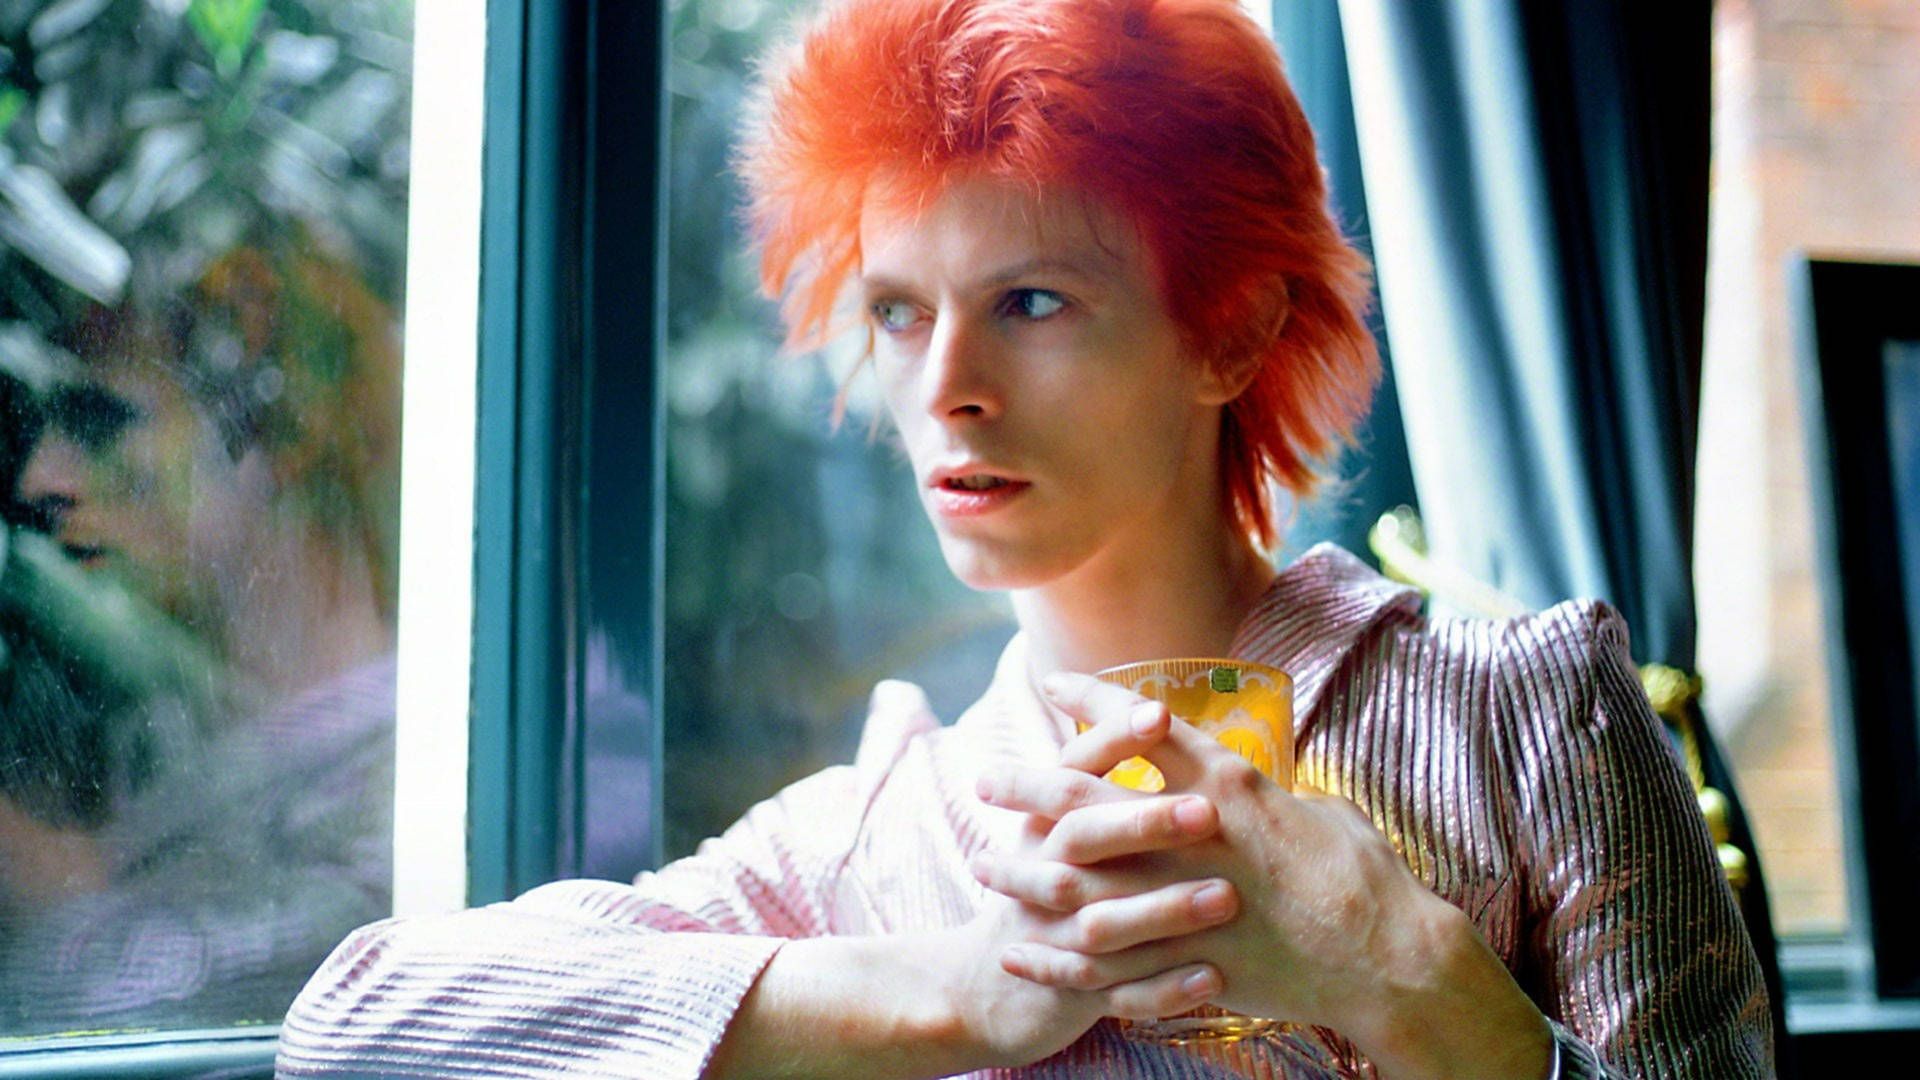 Download David Bowie With Orange Hair Wallpaper